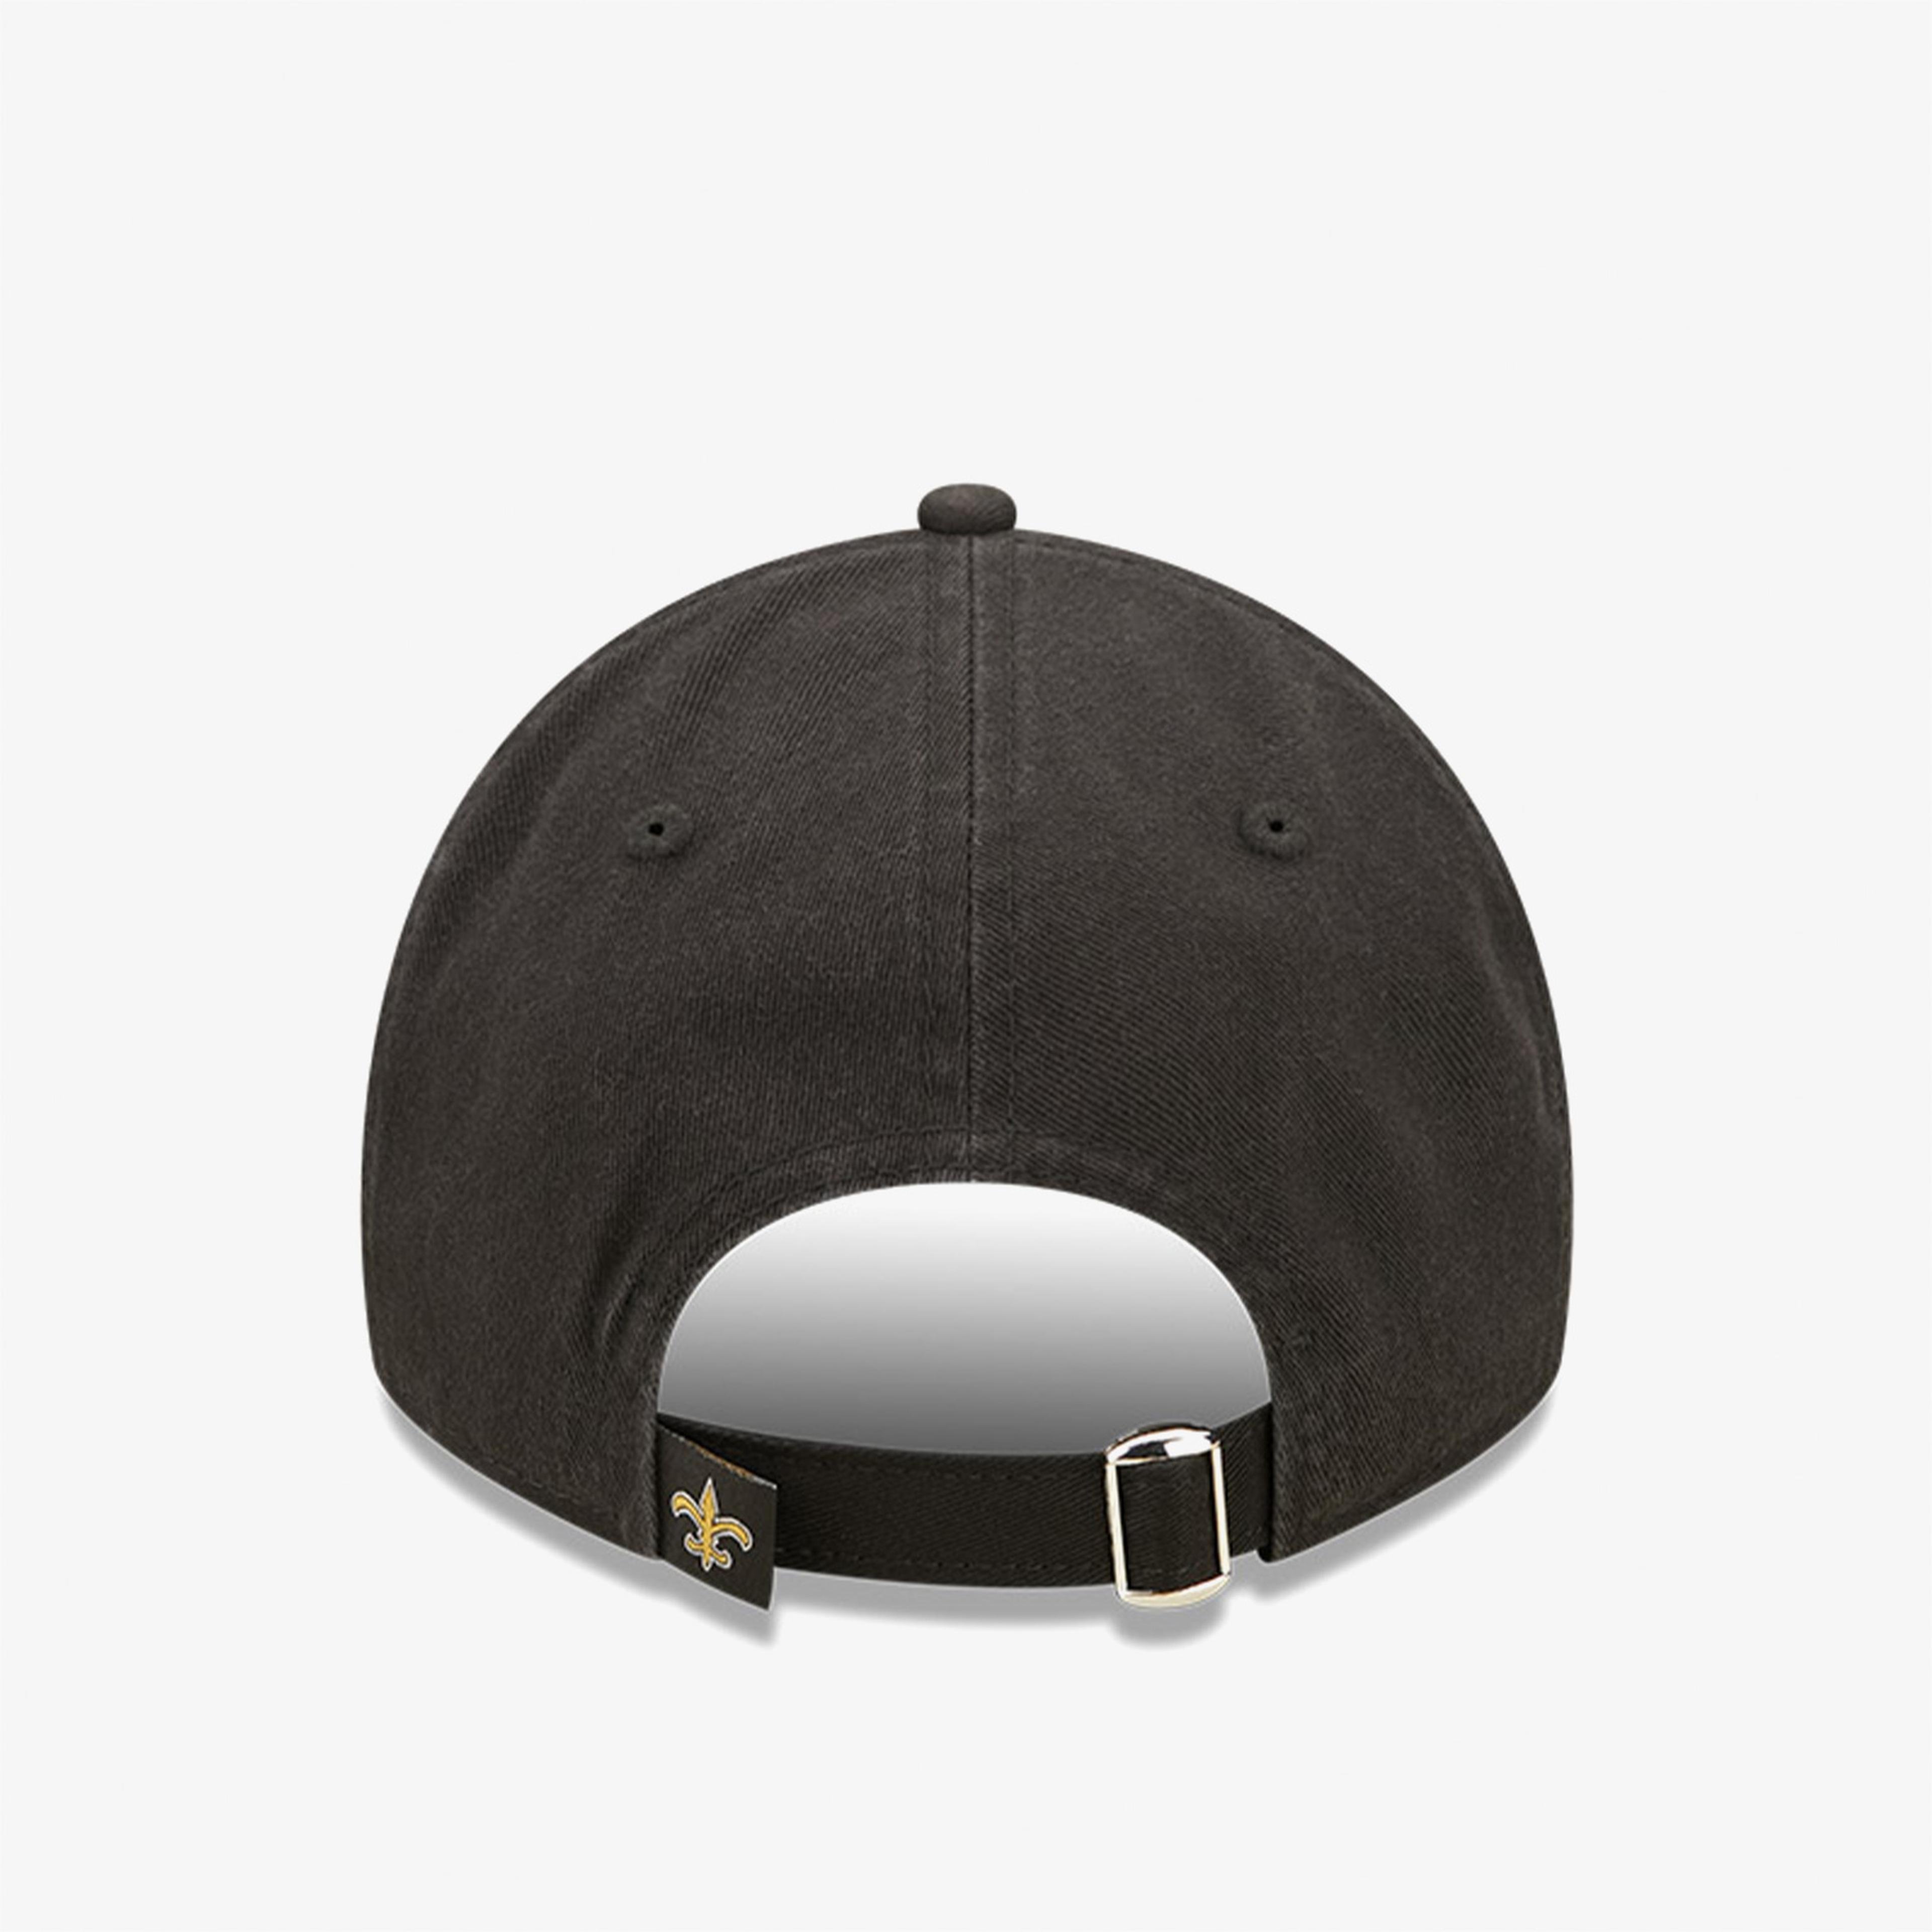 New Era New Orleans Saints NFL Sideline Unisex Siyah Şapka